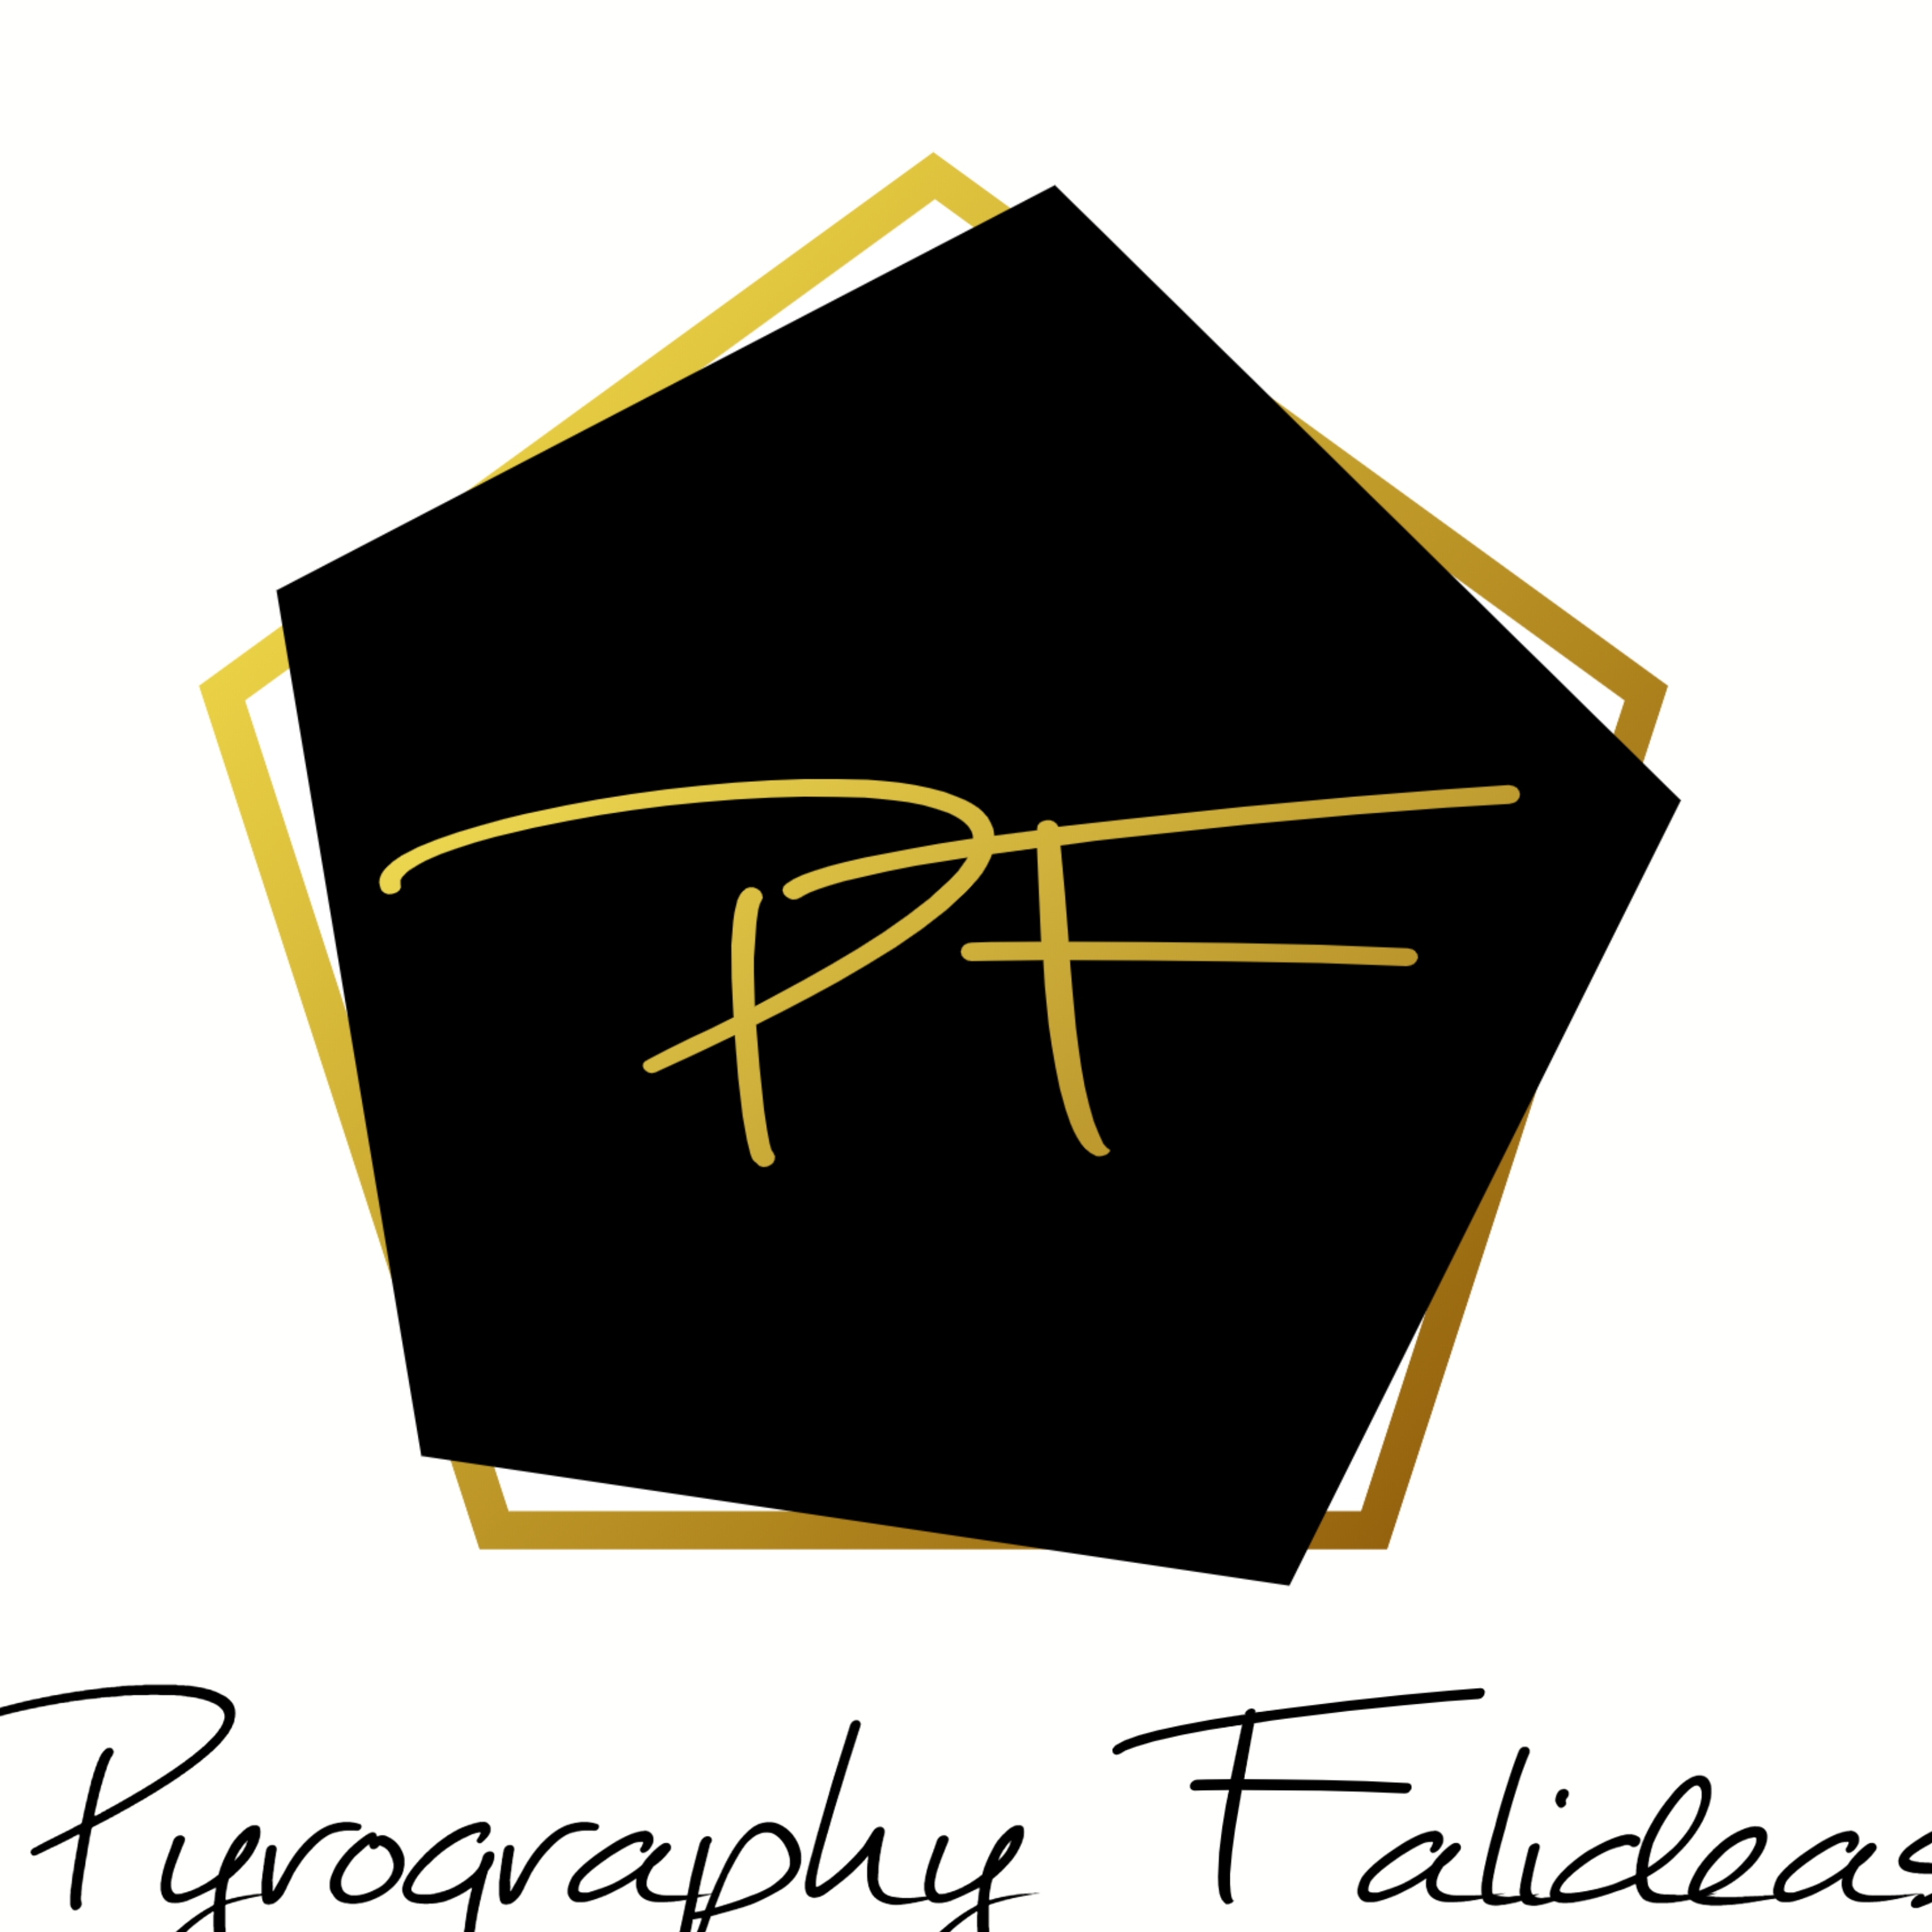 Pyrography Falideas